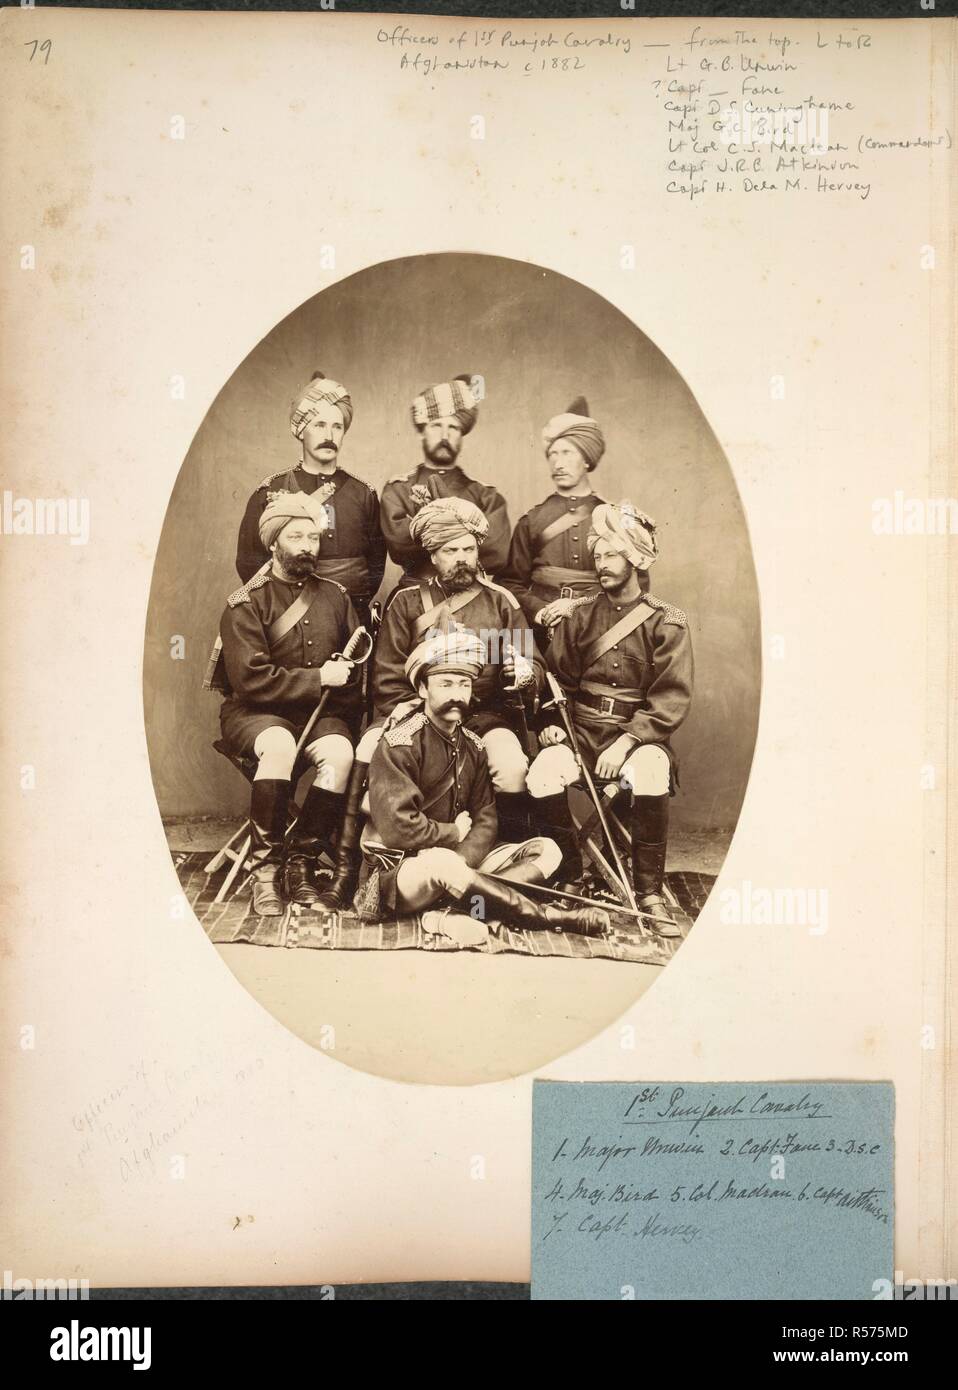 Officers of 1st Punjab Cavalry, Afghanistan. Full-length studio portrait of seven cavalry officers, identified on accompanying slip as follows: Major [G.B.] Unwin; Capt Fane; D.S.C. [Capt D.S. Cuninghame]; Maj [G.C.] Bird; Col [Charles Smith] Maclean [Commander]; Capt [J.R.B.] Atkinson; Capt [H. de la M.] Hervey . c. 1880. Source: Photo 447/3(109). Stock Photo